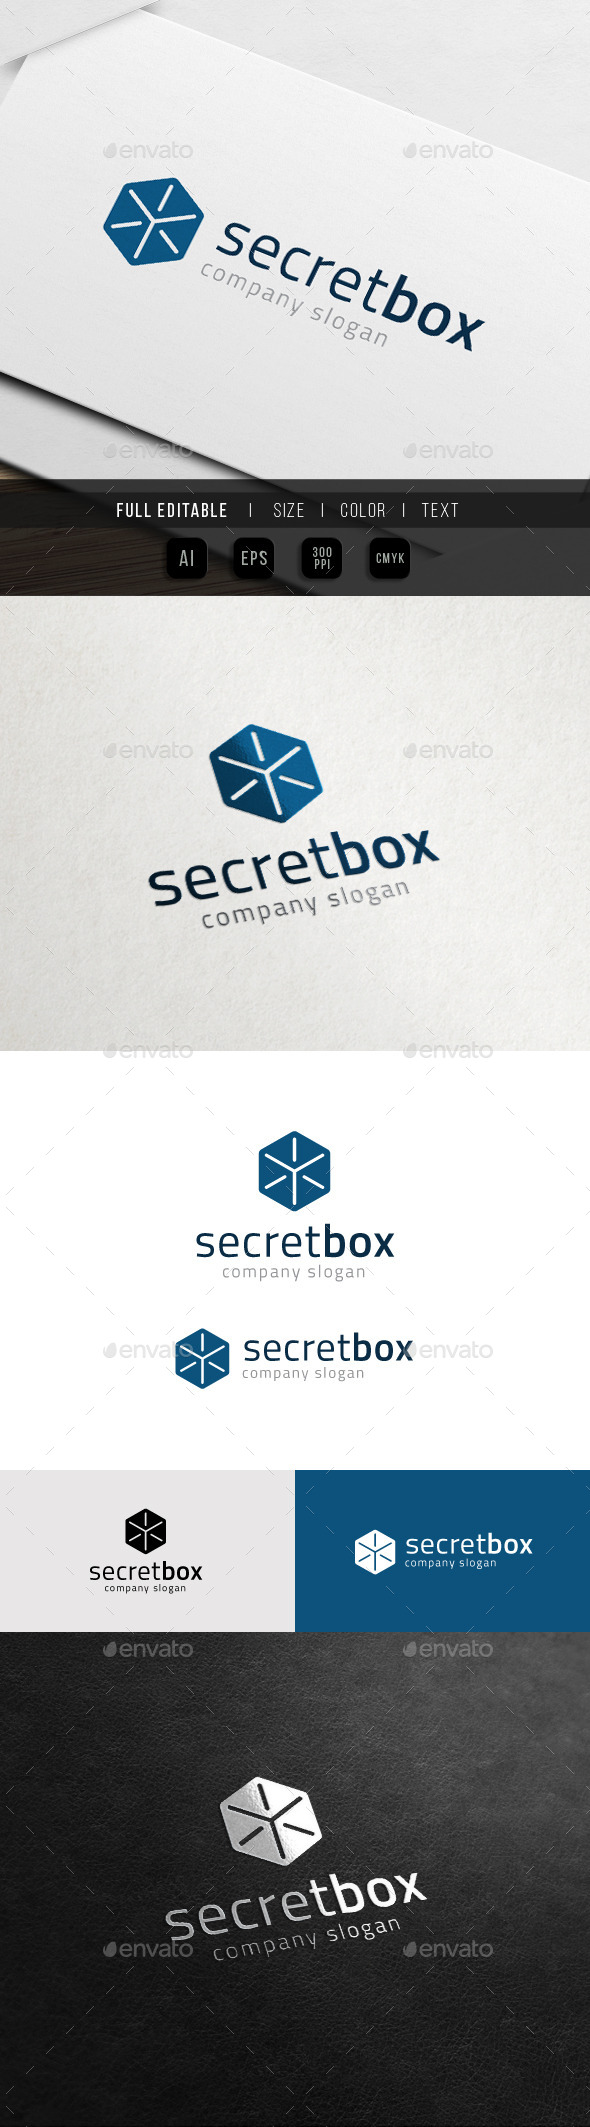 Secret Data Box - Cube Security System Logo